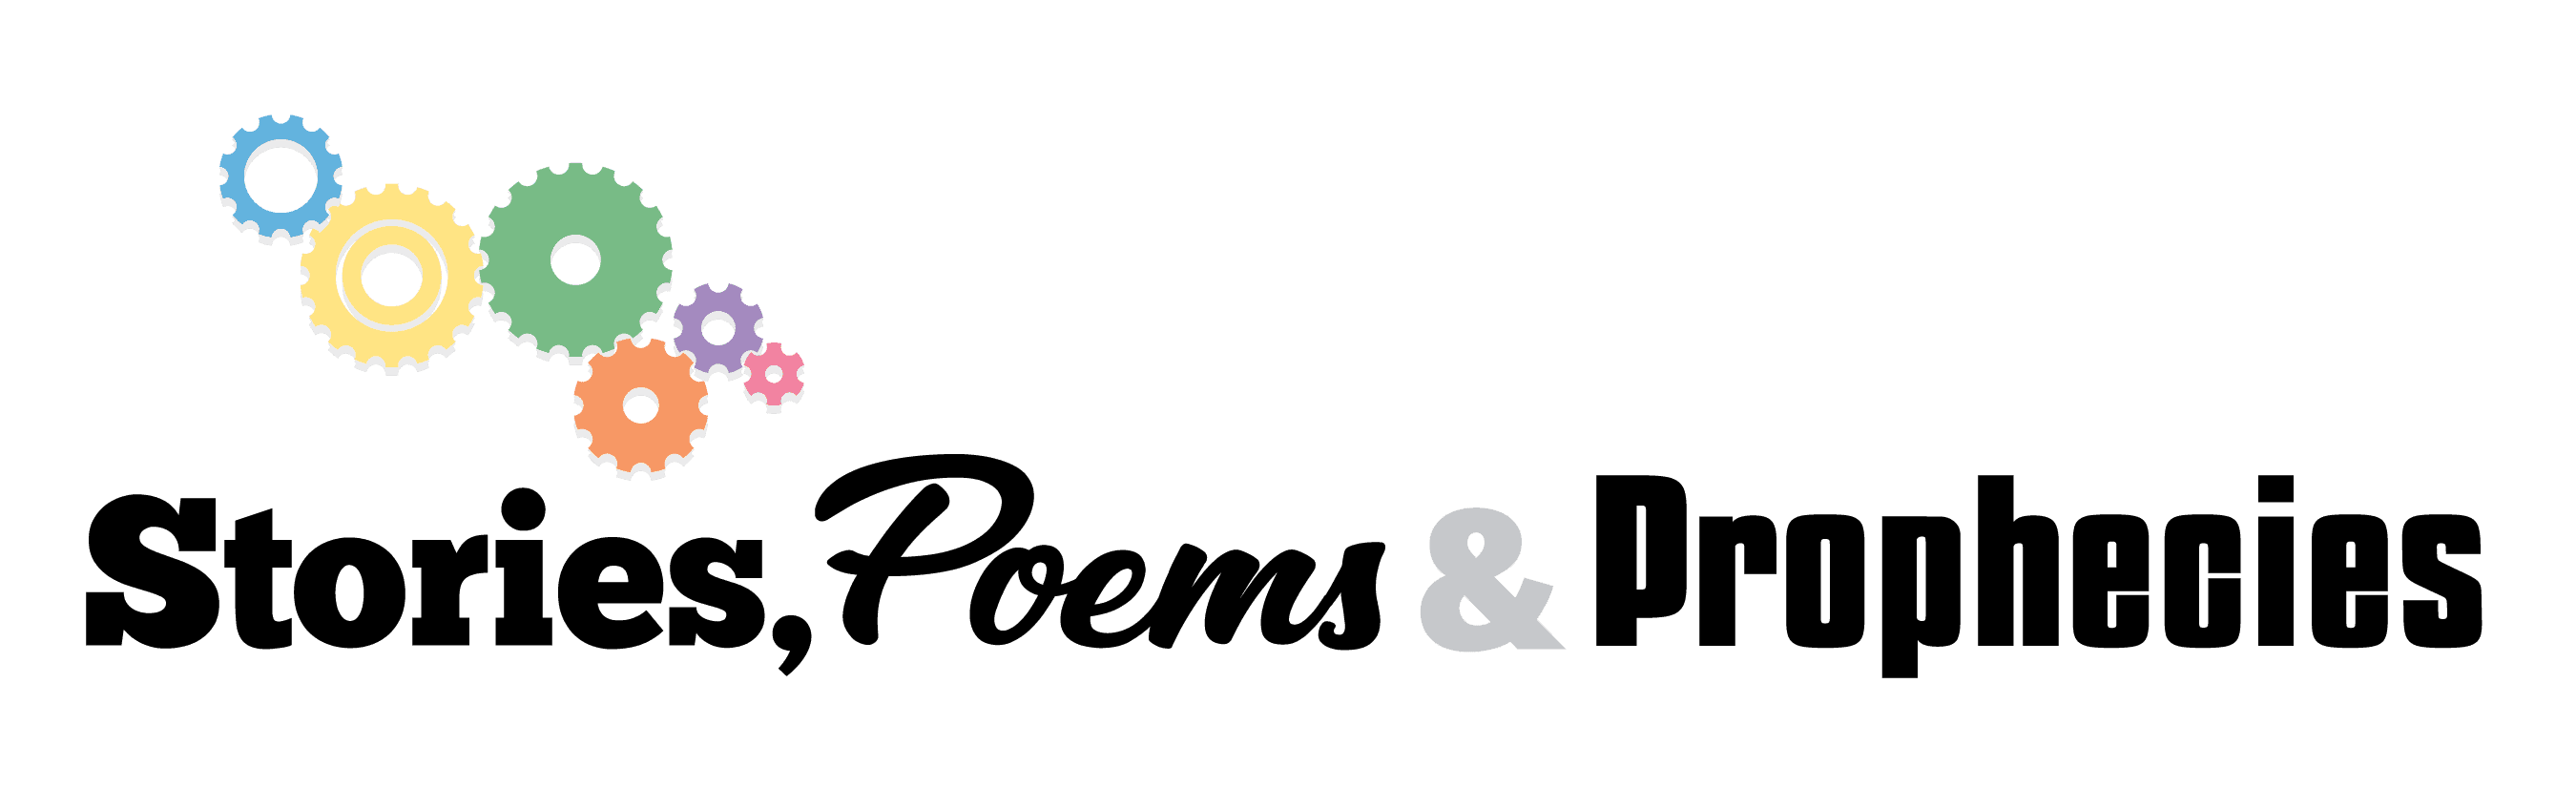 Stories, Poems & Prophecies logo